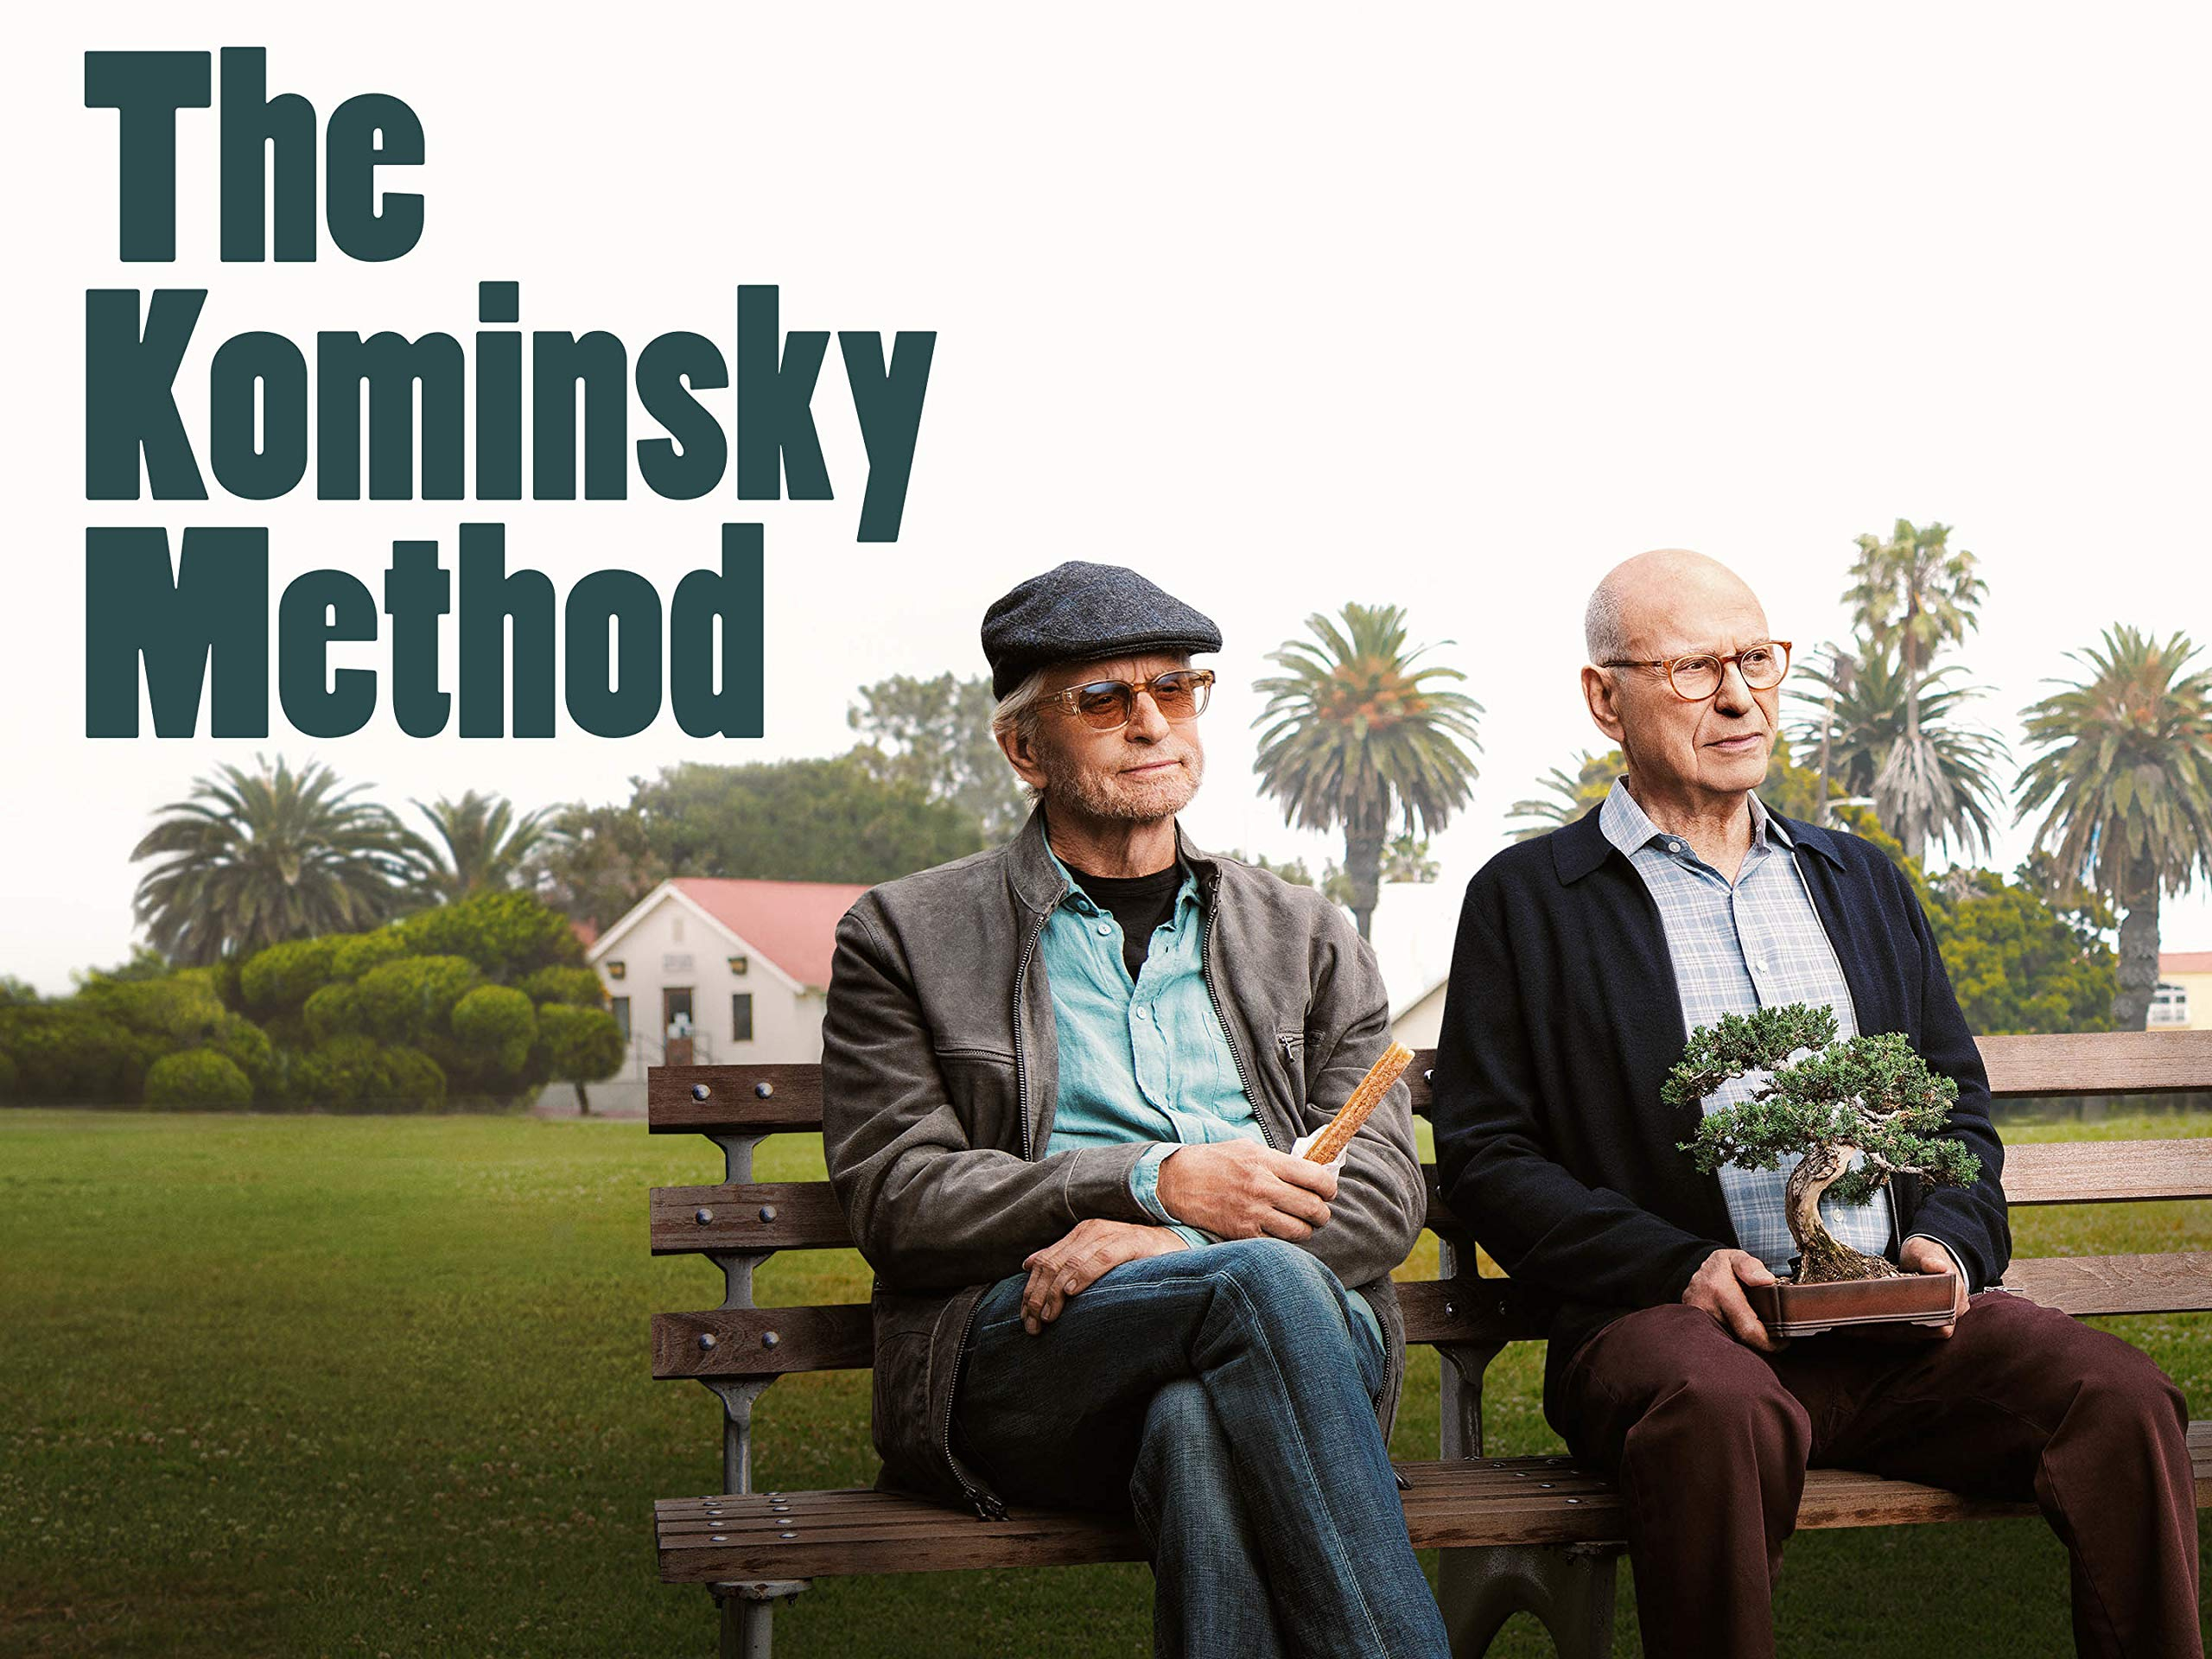 The Kominsky Method Season 1 (2018)